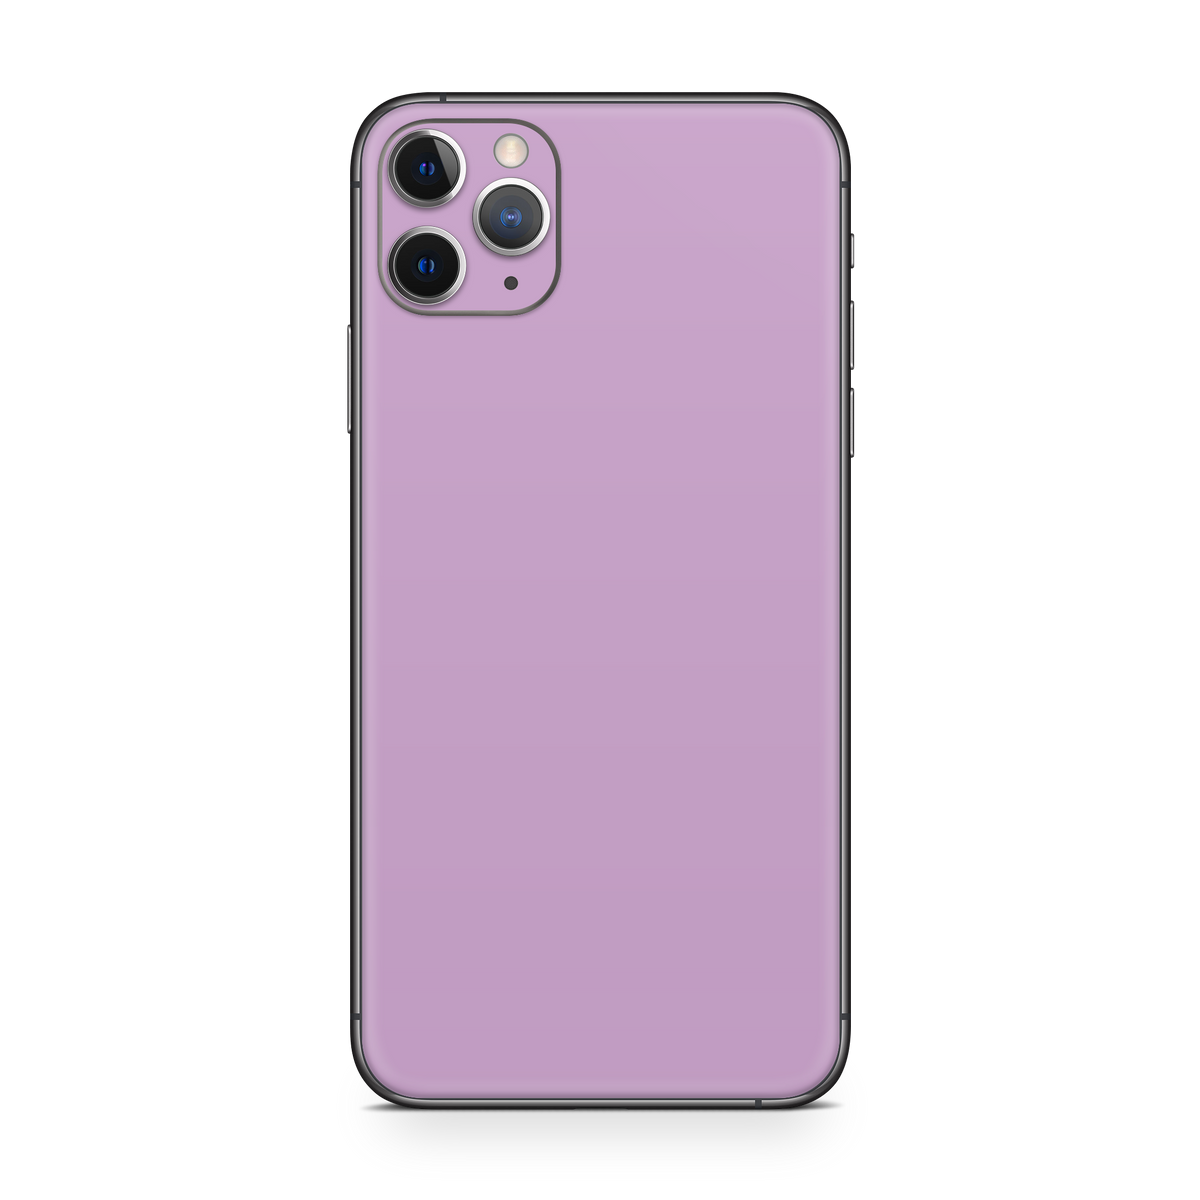 Apple iPhone 11 Pro max Soft Lilac Skin